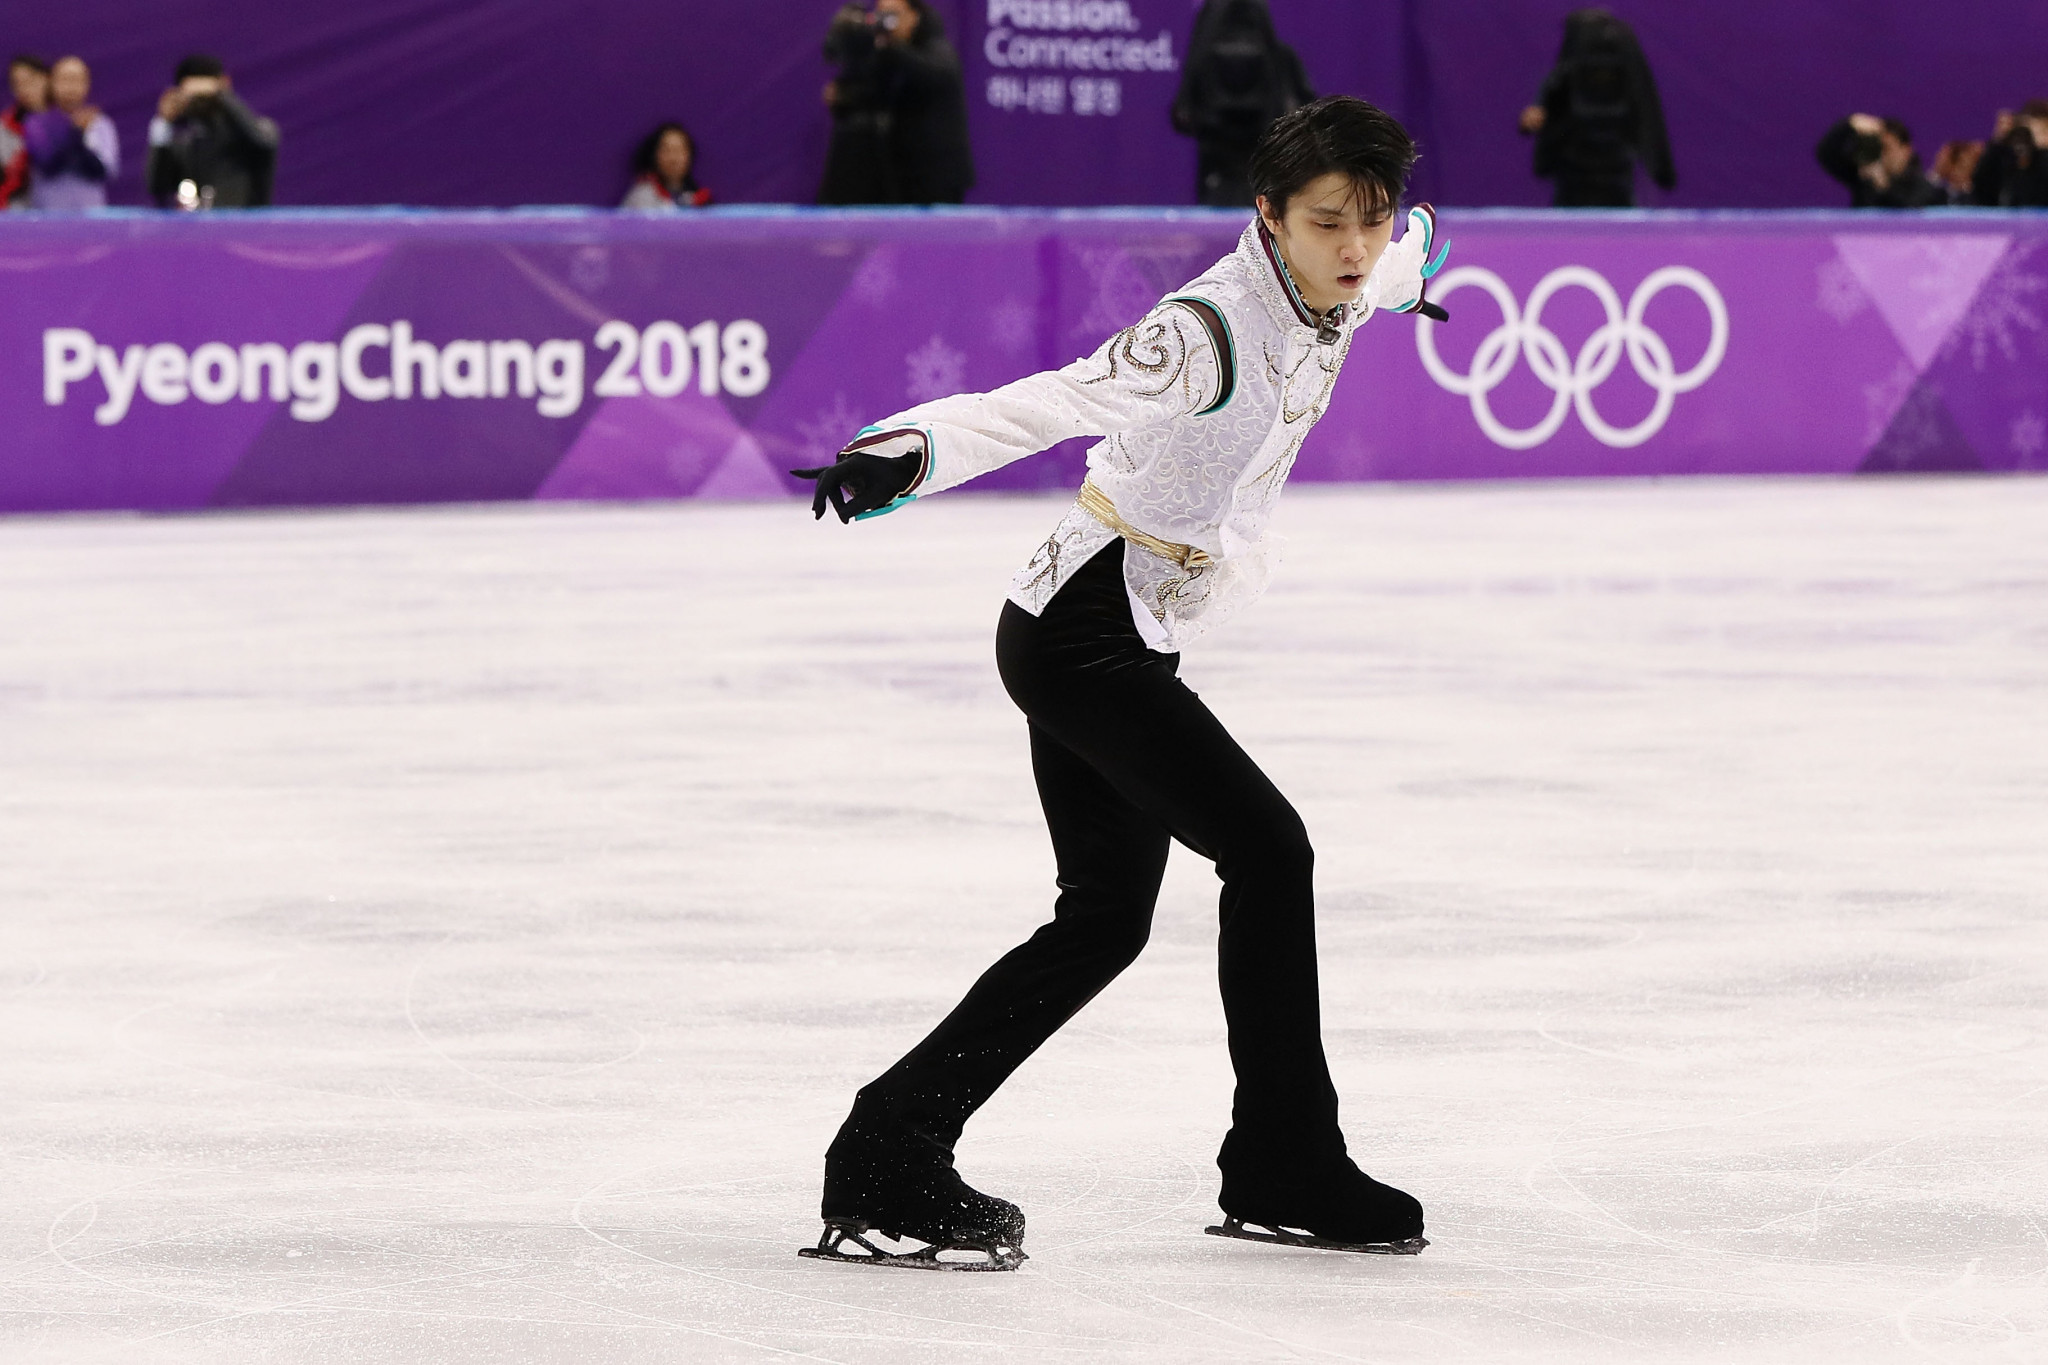 Japan's double Olympic gold medallist Yuzuru Hanyu will begin his season this weekend ©Getty Images